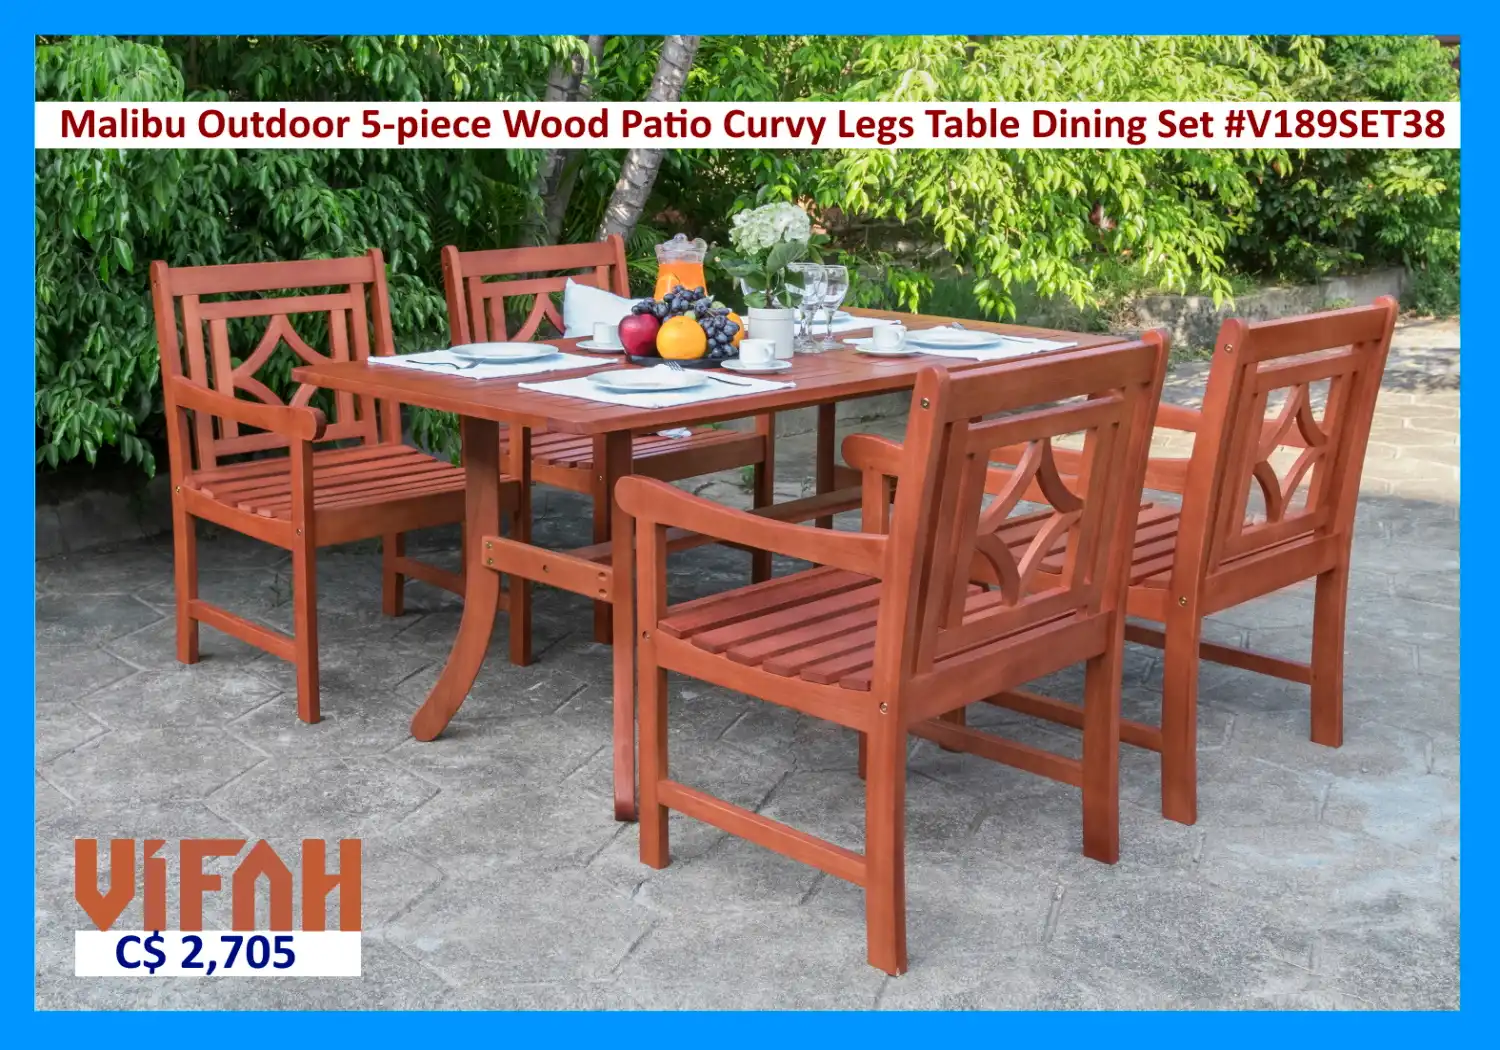 MALIBU Outdoor #V189SET38 5-piece Wood Patio Curvy Legs Table Dining Set